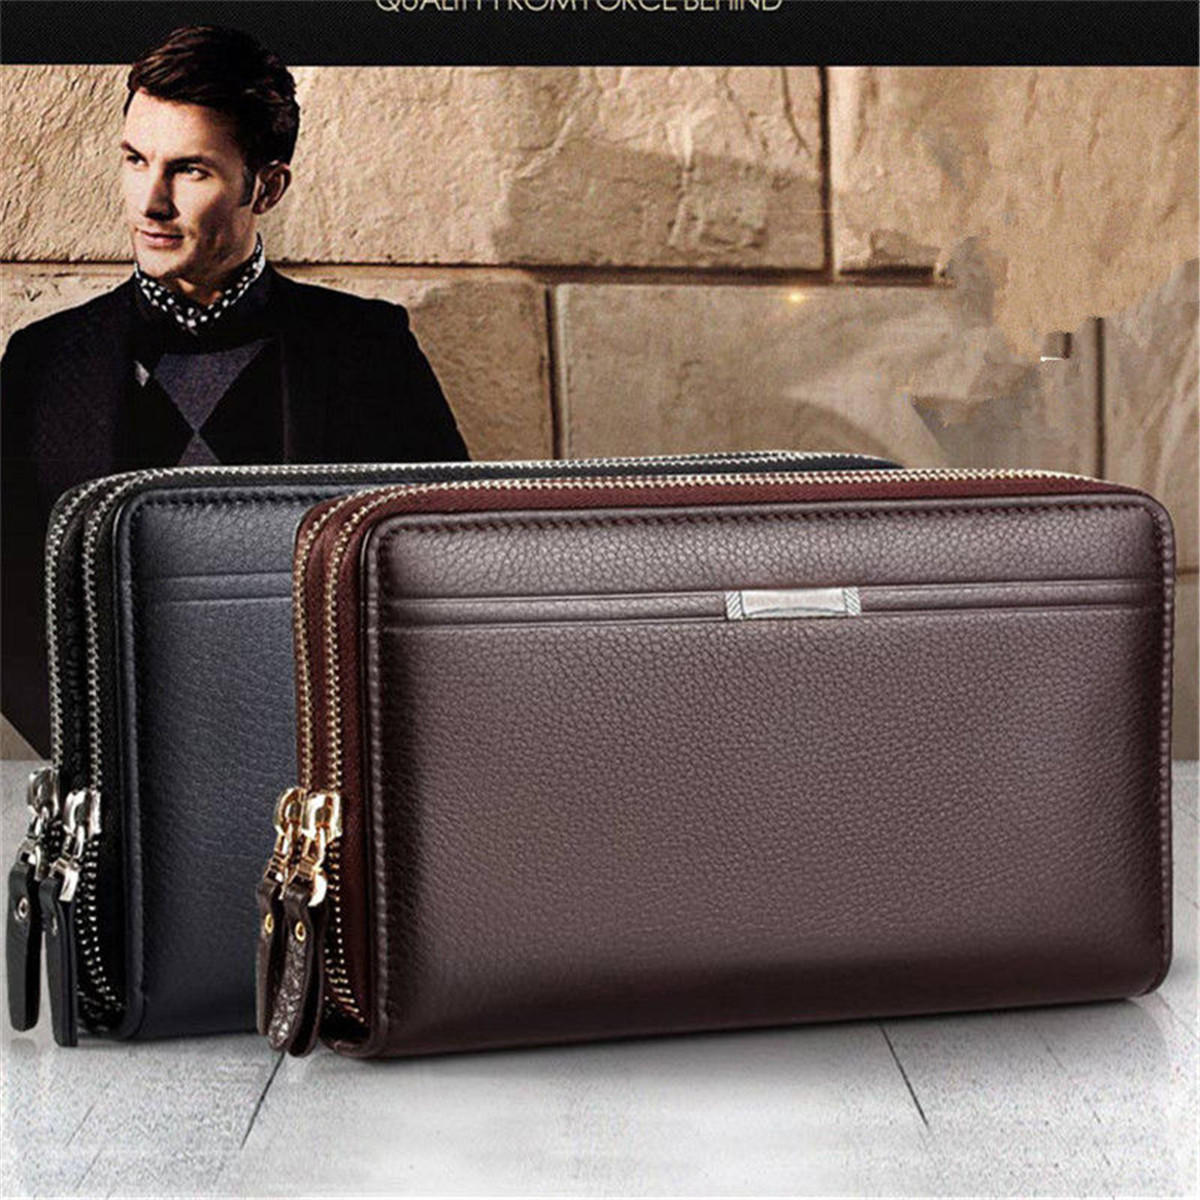 Image of Business Men Leather Clutches Bag Handbag Wallet Purse Mobile Phone Card